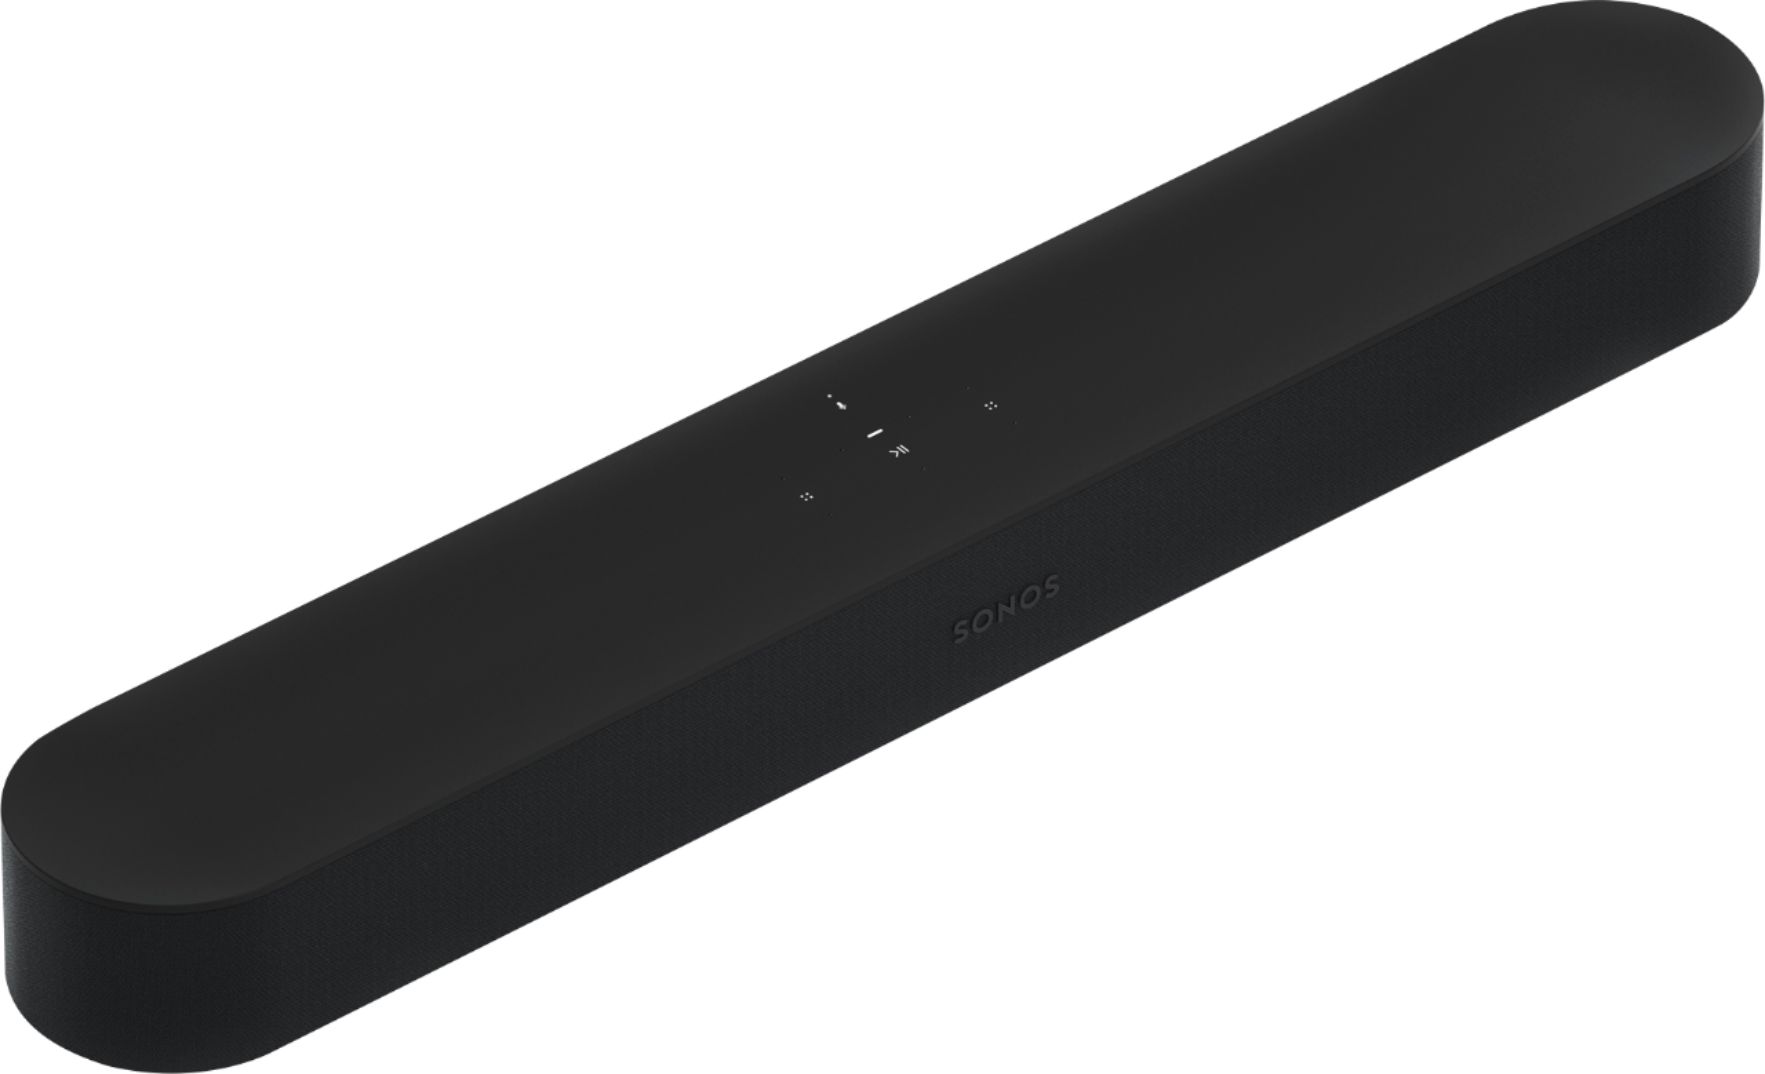 Angle View: SAMSUNG 2.0 Channel Wireless Rear Speaker Kit - SWA-8500S/ZA